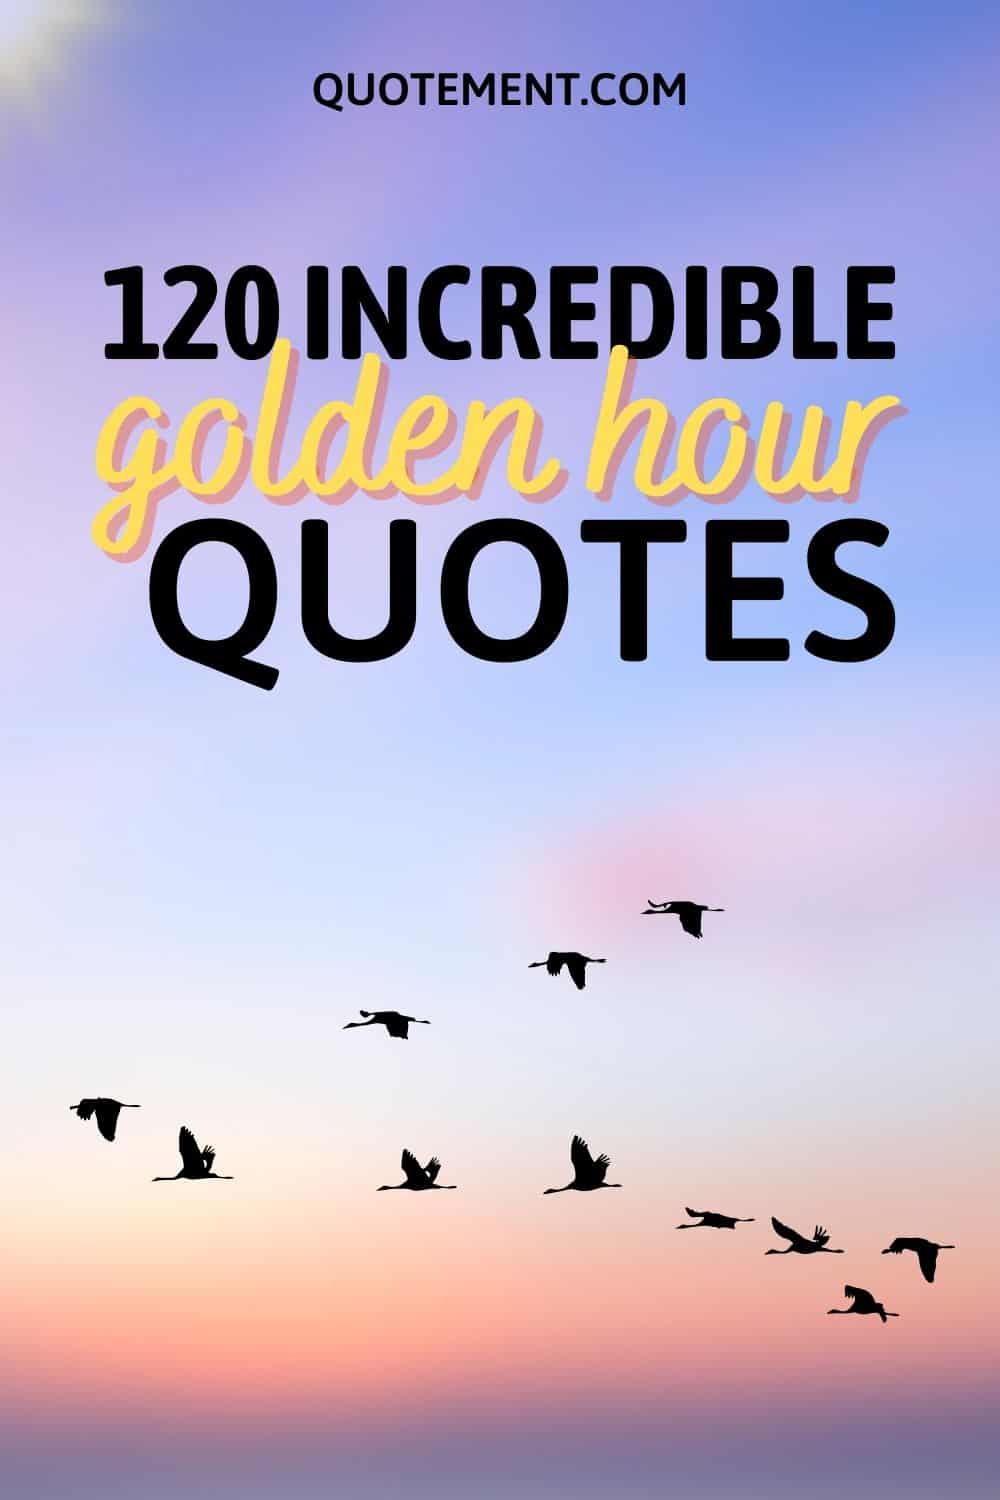 120 citas sobre la hora dorada